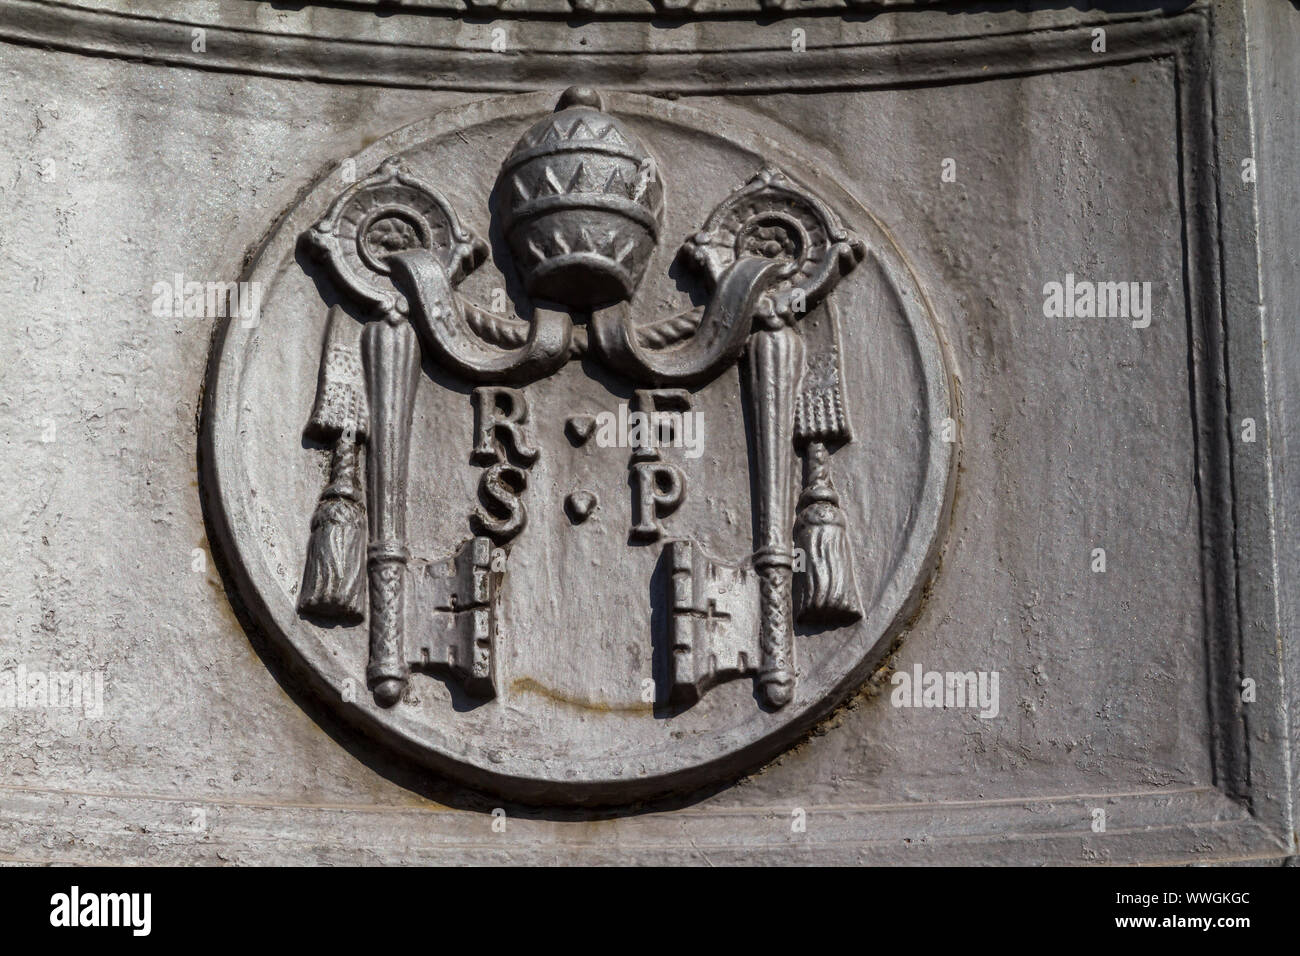 Vatican. emblem 'Reverend Fabric of St. Peter' Stock Photo